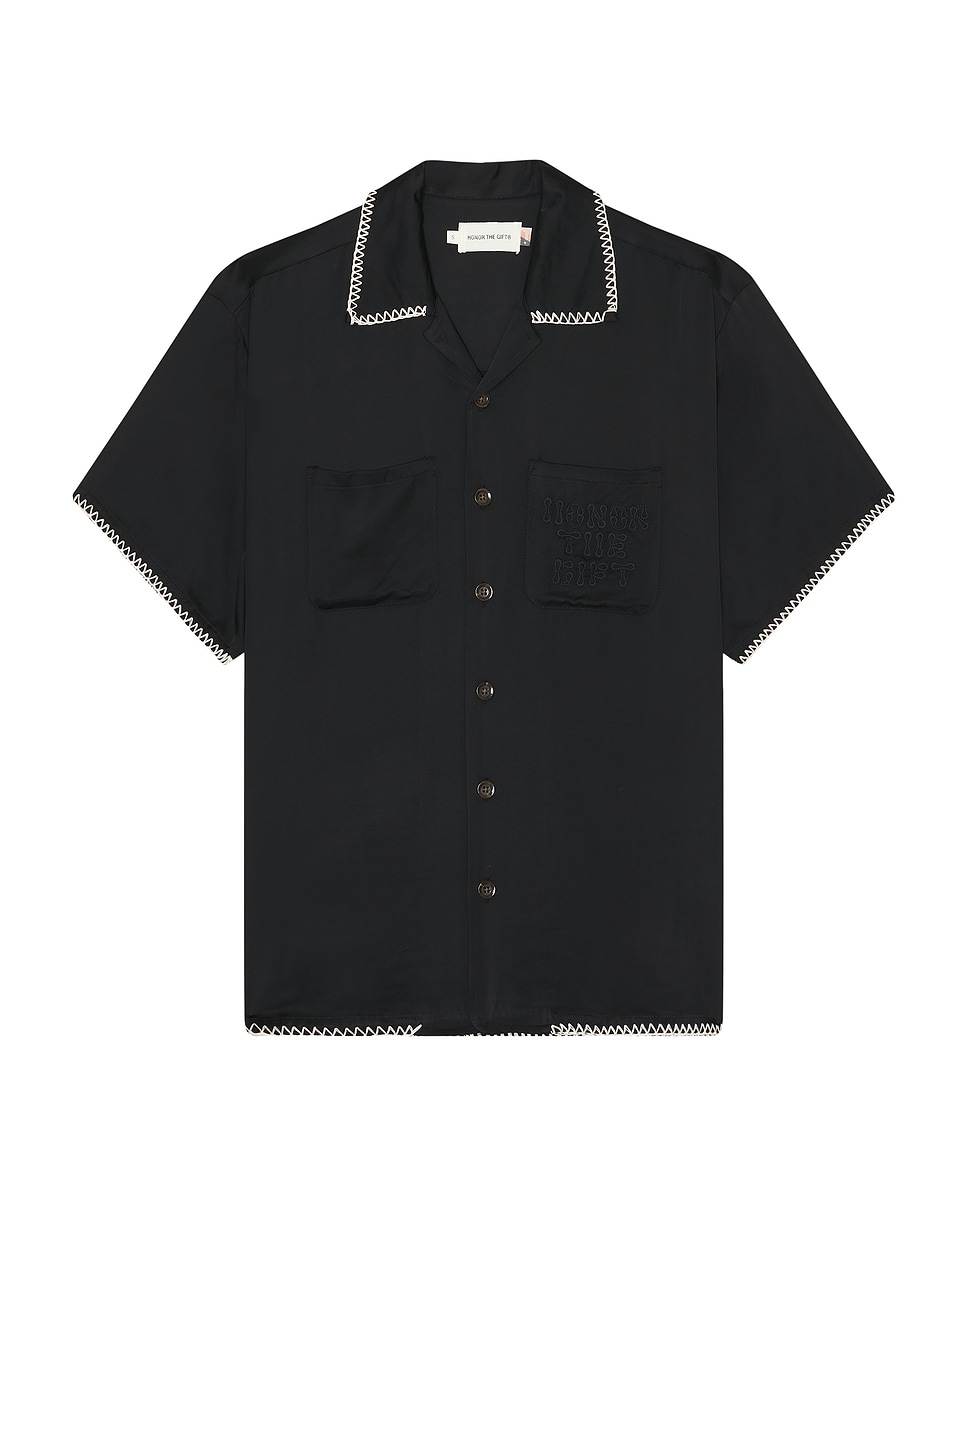 Blanket Stitch Woven Shirt in Black